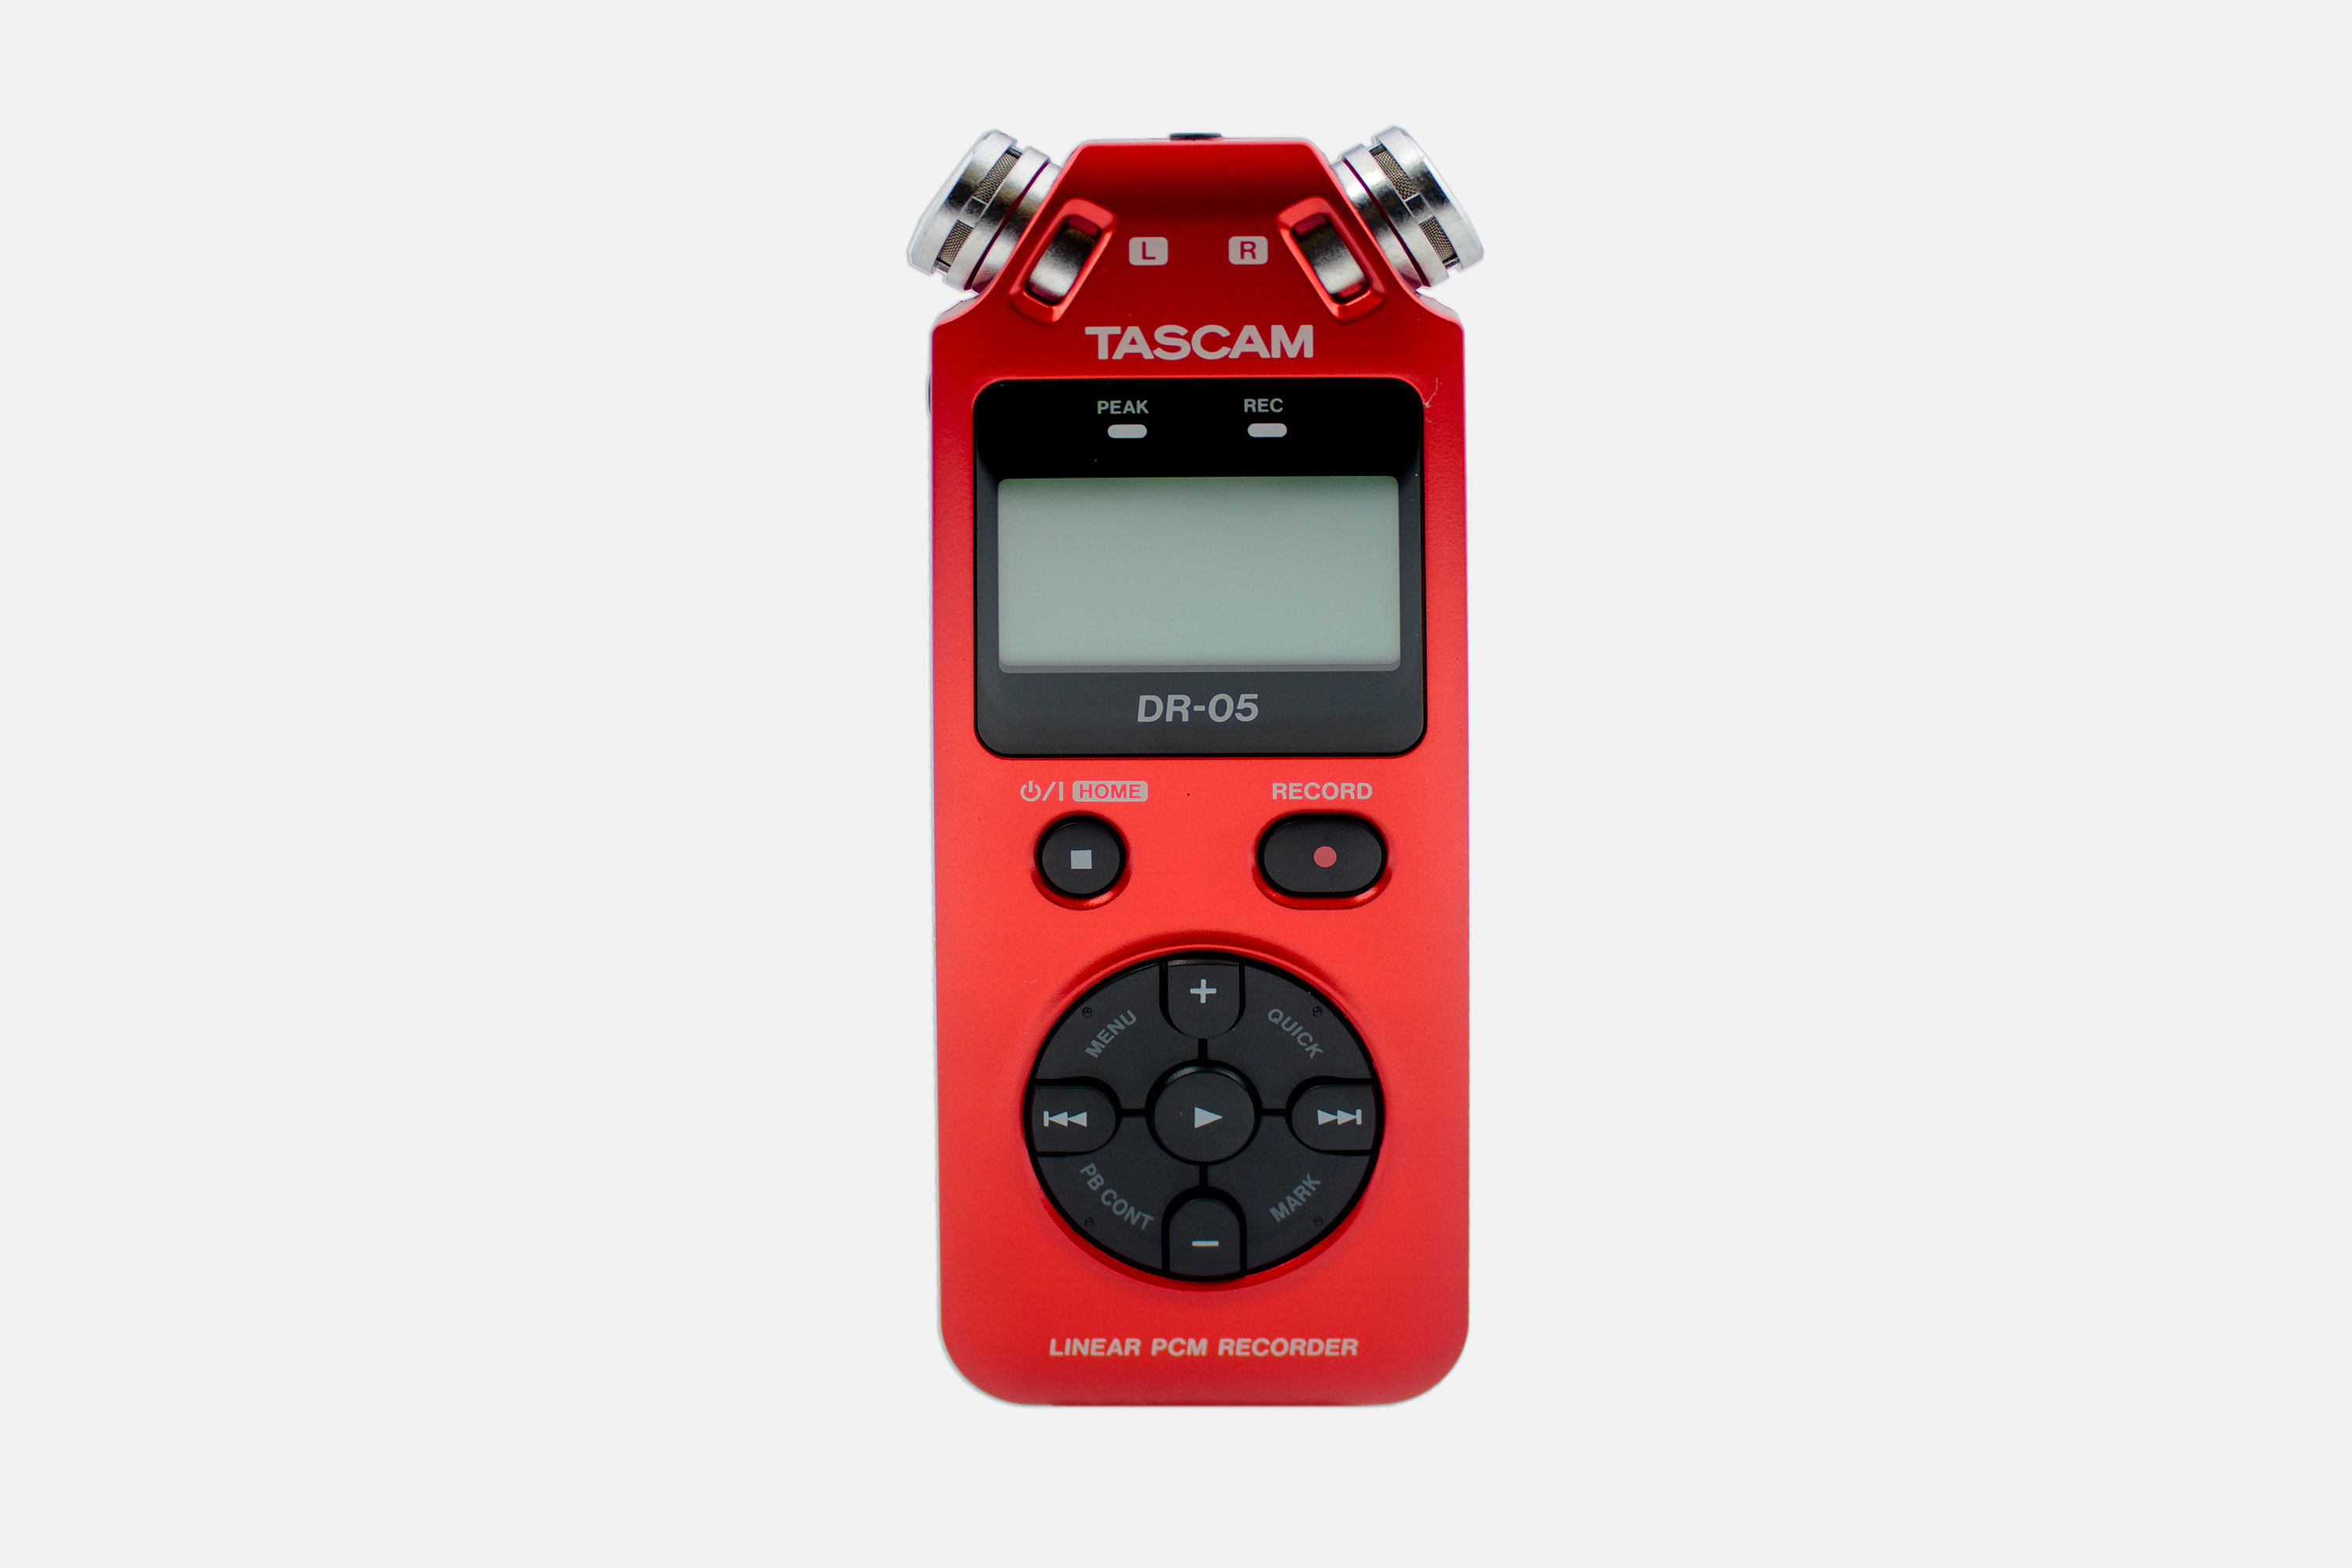 Digital voice recorder kit, TASCAM